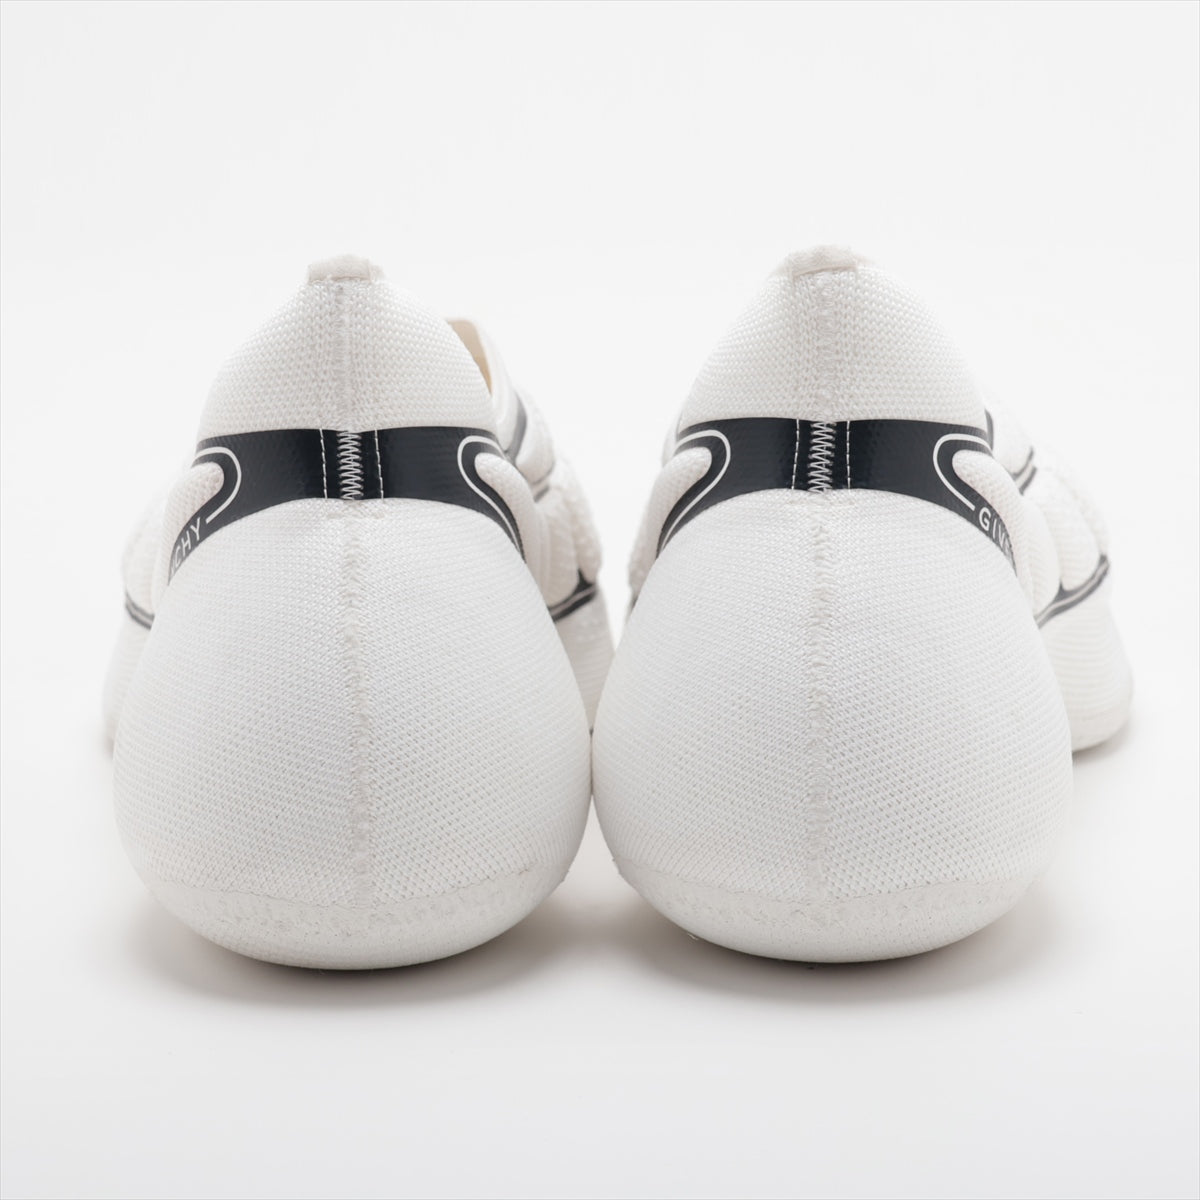 Givenchy Knit Sneakers 43 Men's White FR0262 PLUS SNEAKER